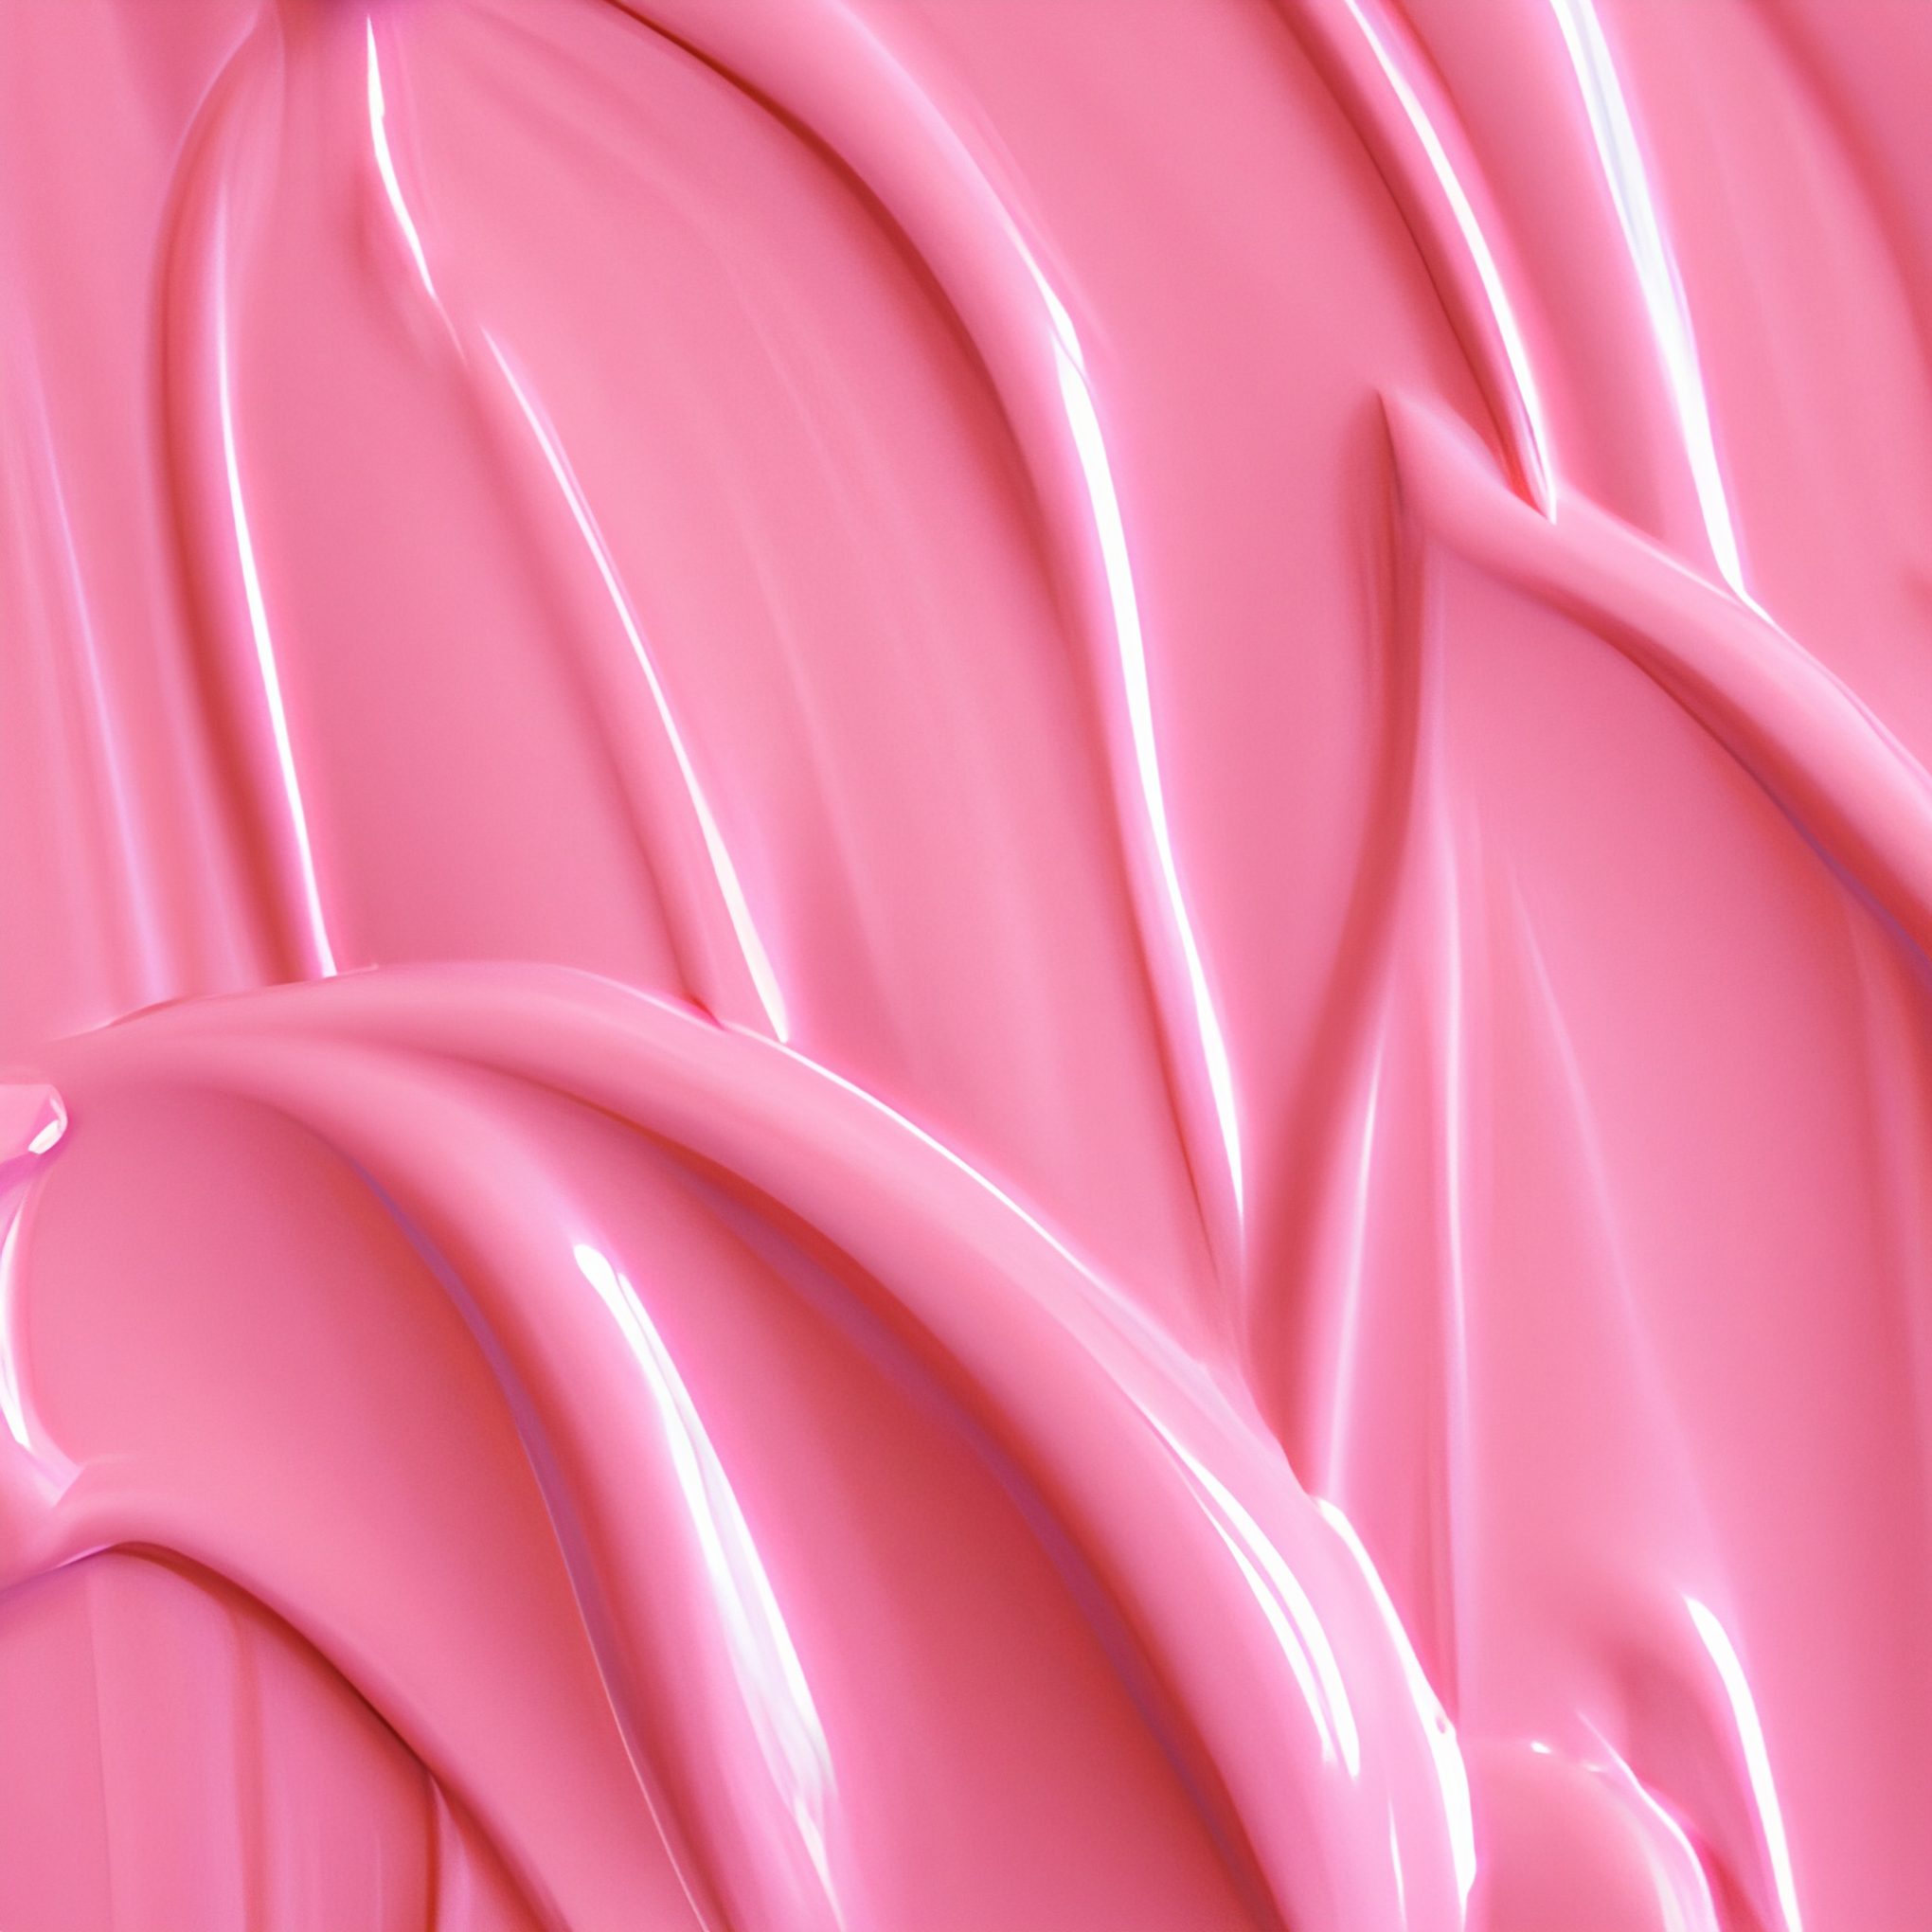 Pink Cosmetic Moisturiser Cream Liquid Free Stock Photo Download